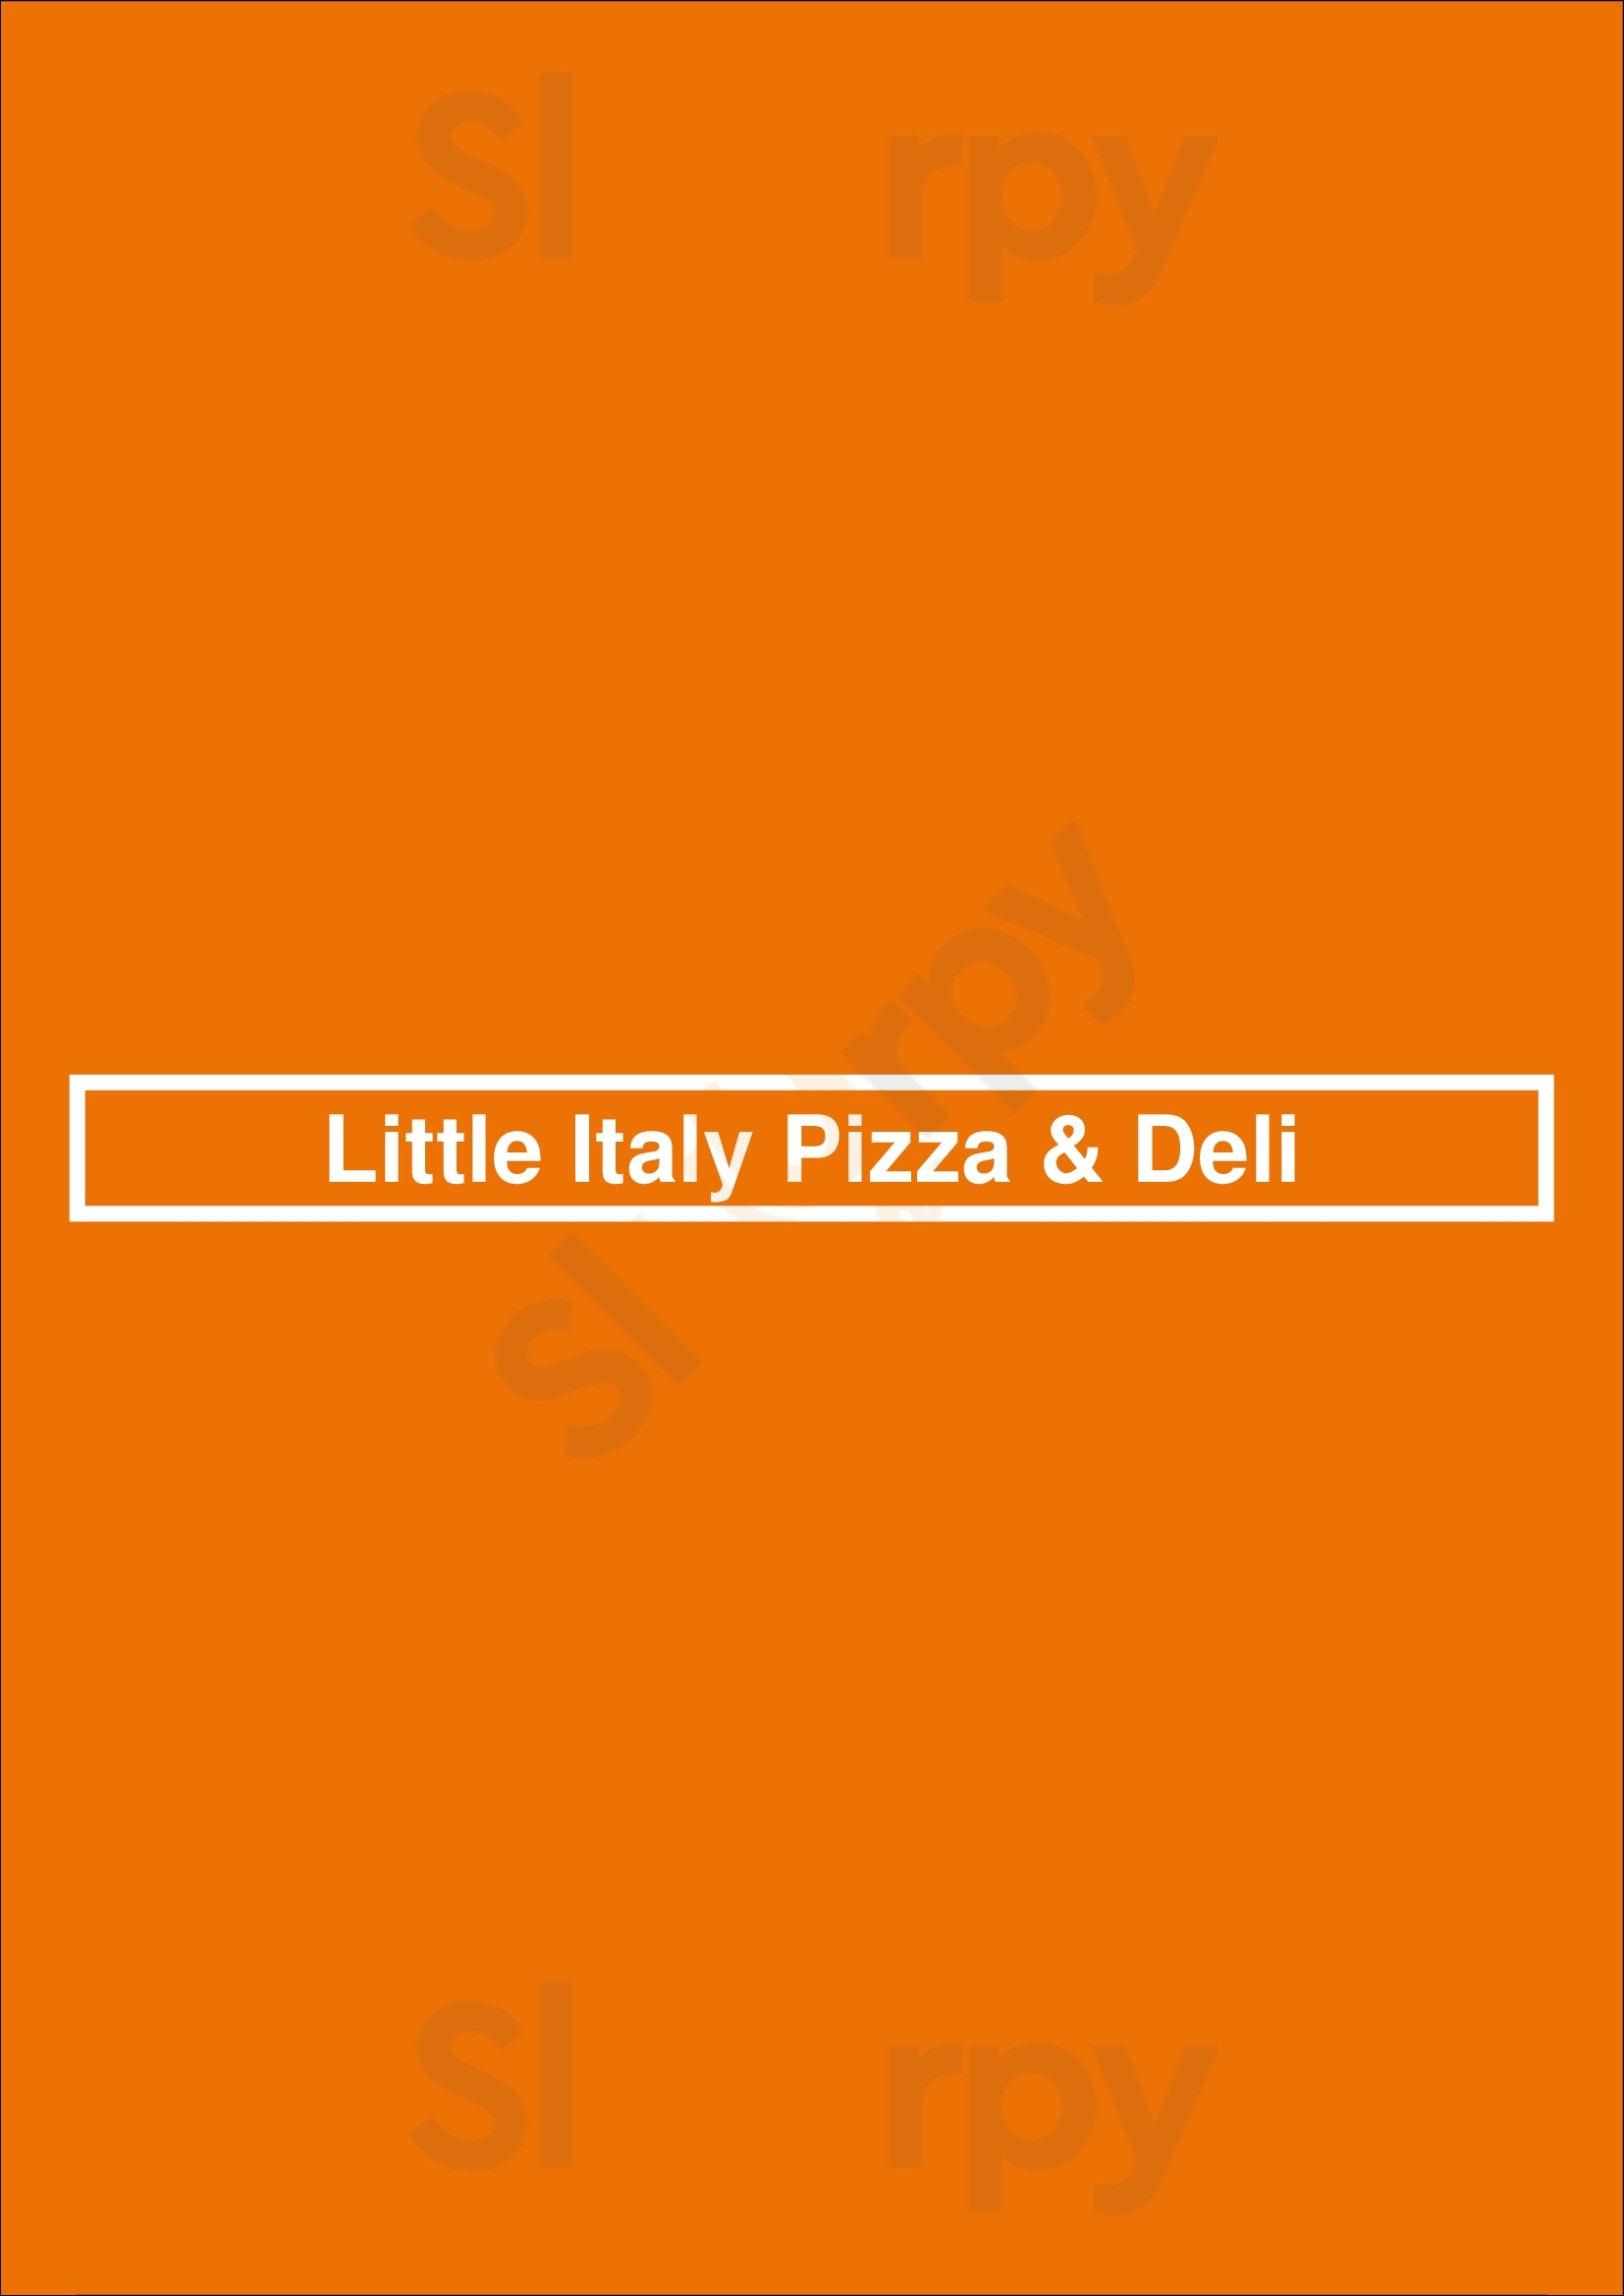 Little Italy Pizza New York City Menu - 1